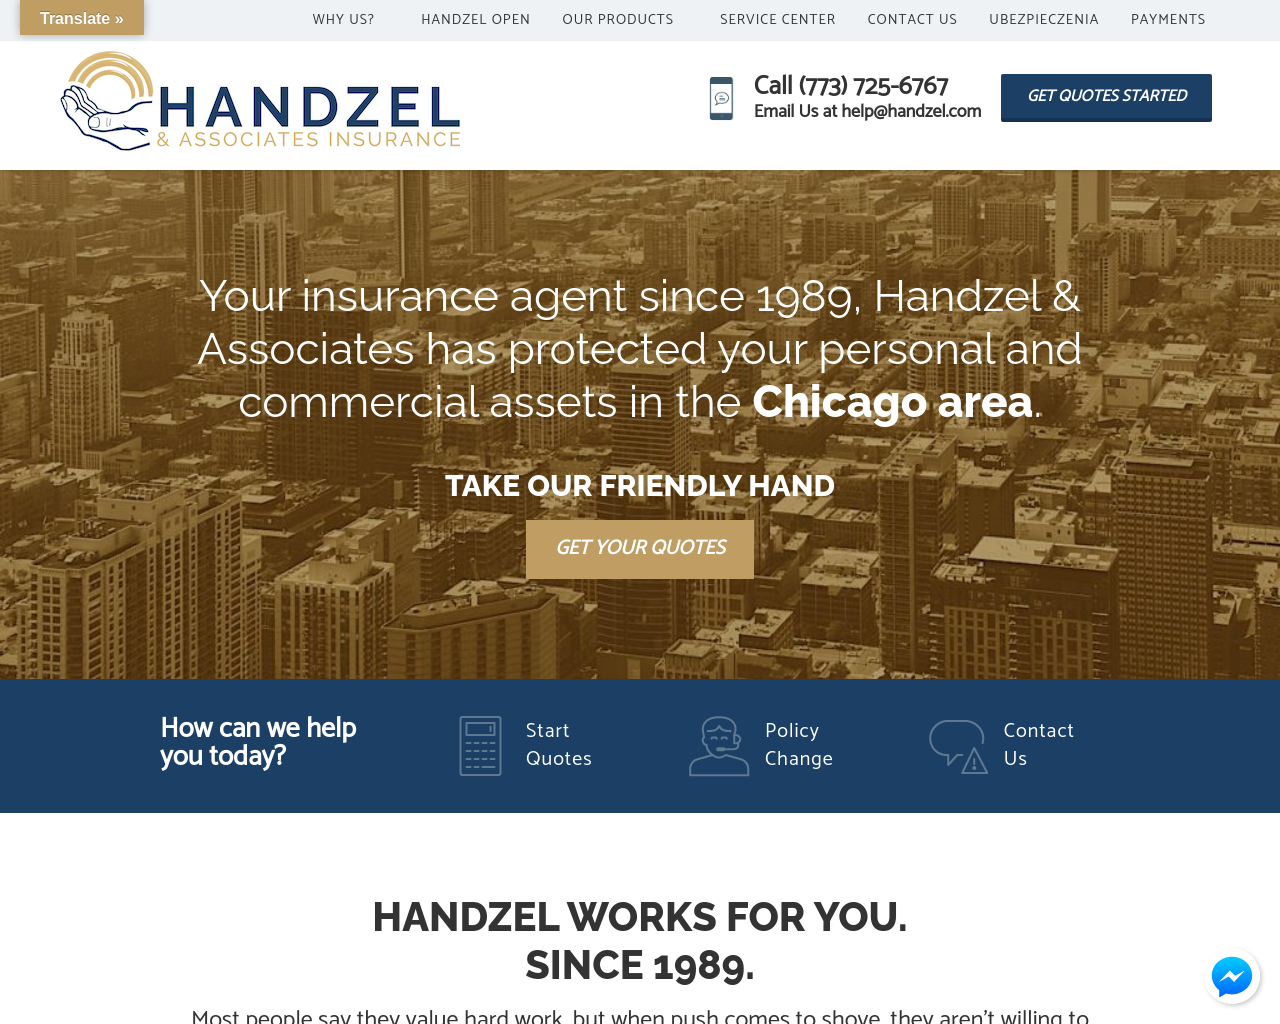 handzel.com